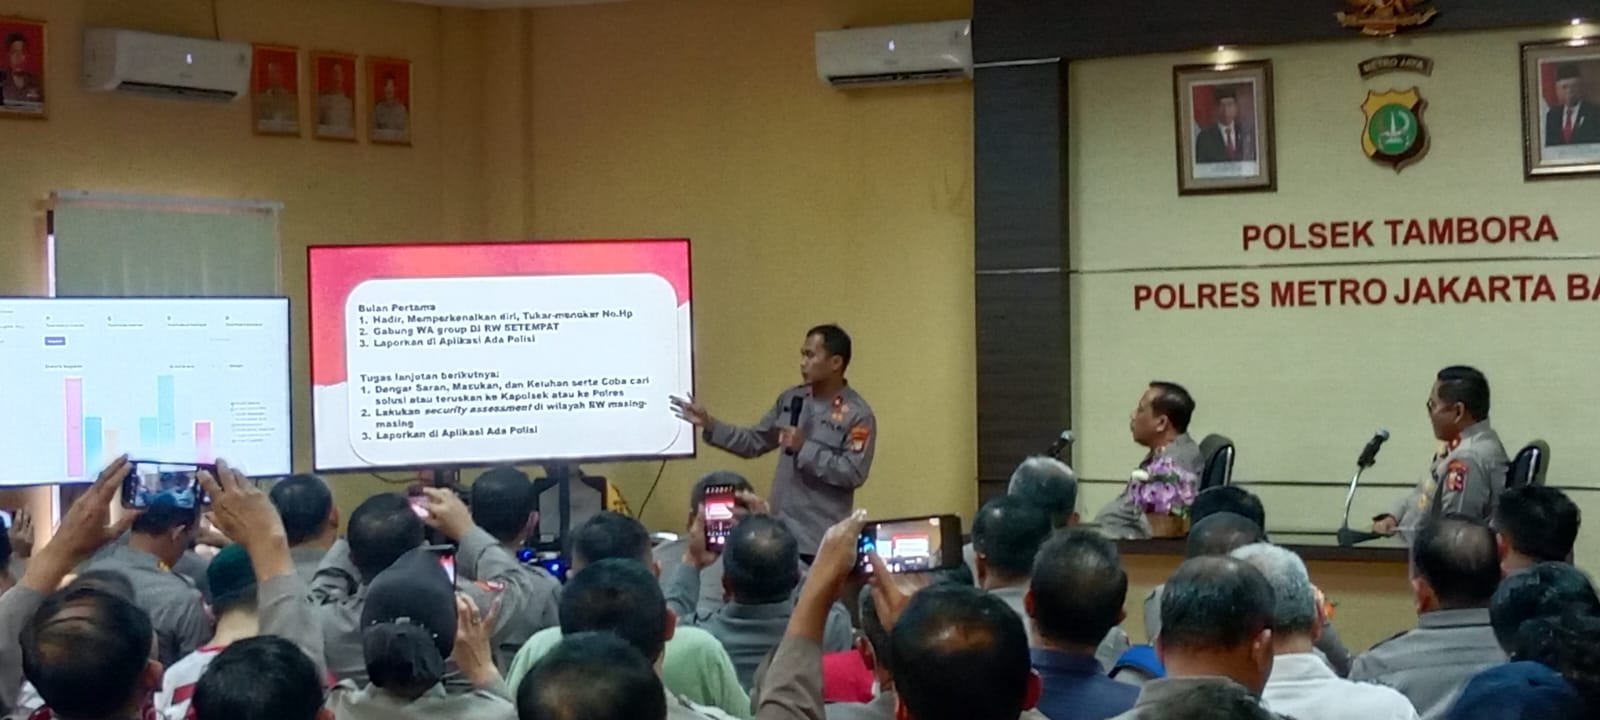 Program Polisi RW Bakal Diterapkan se-Indonesia, Polsek Tambora Jadi Pilot Project